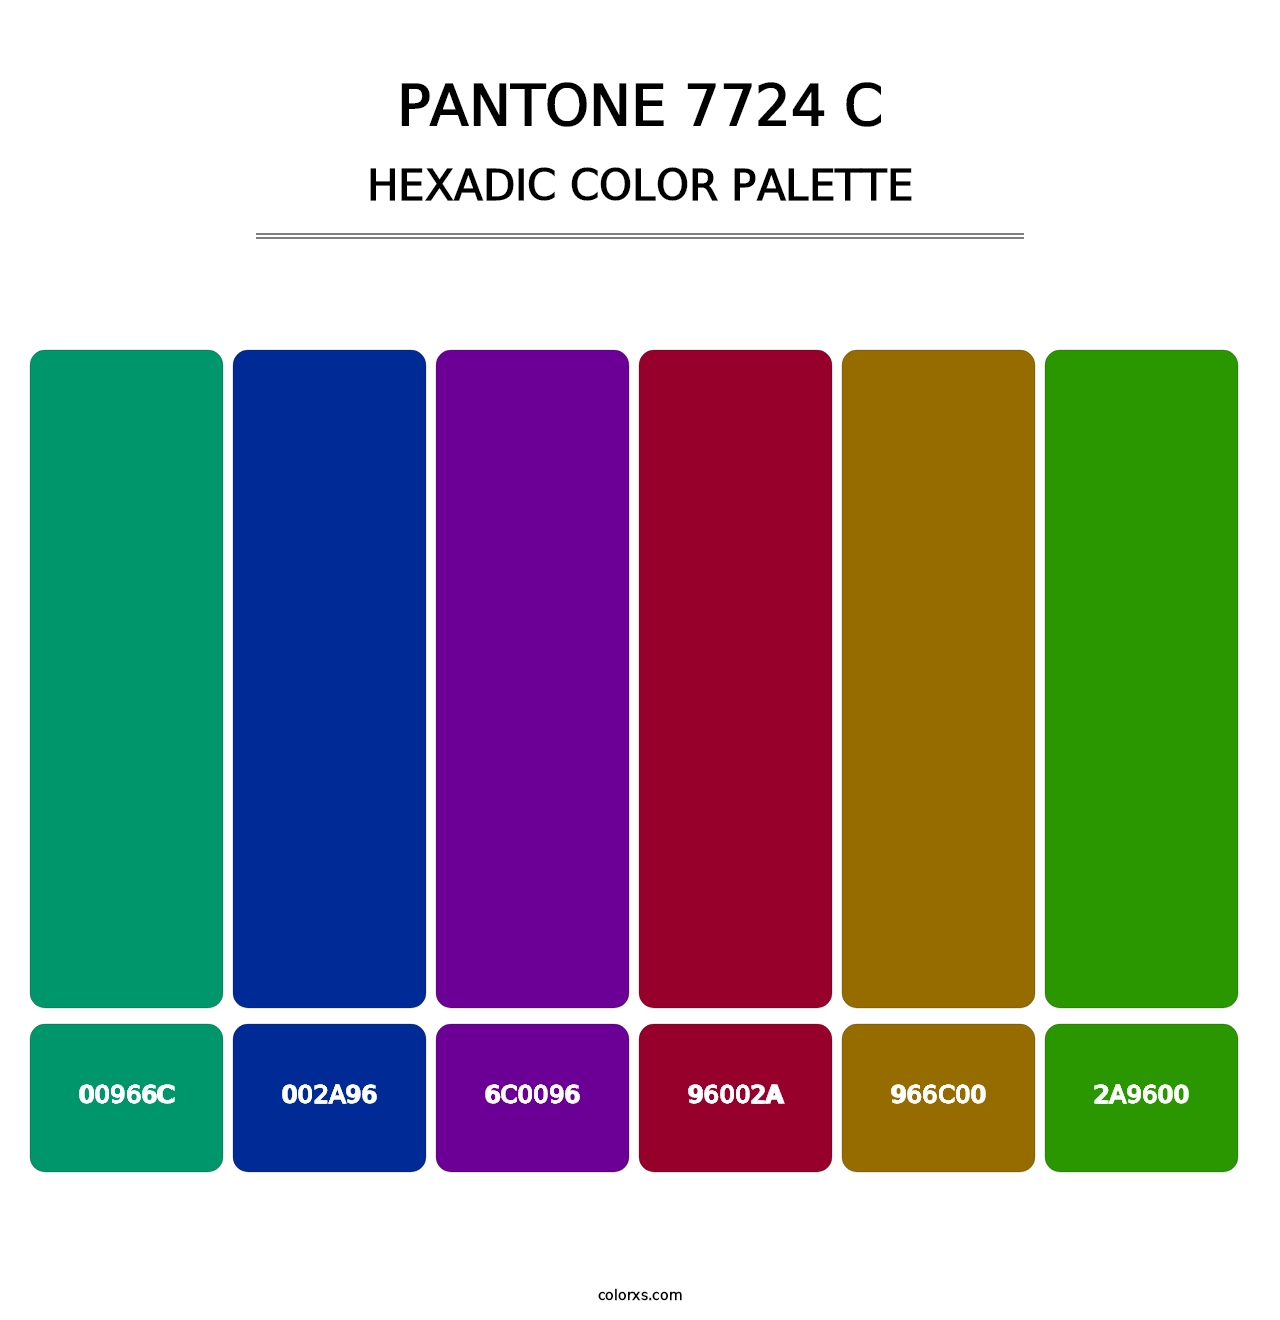 PANTONE 7724 C - Hexadic Color Palette